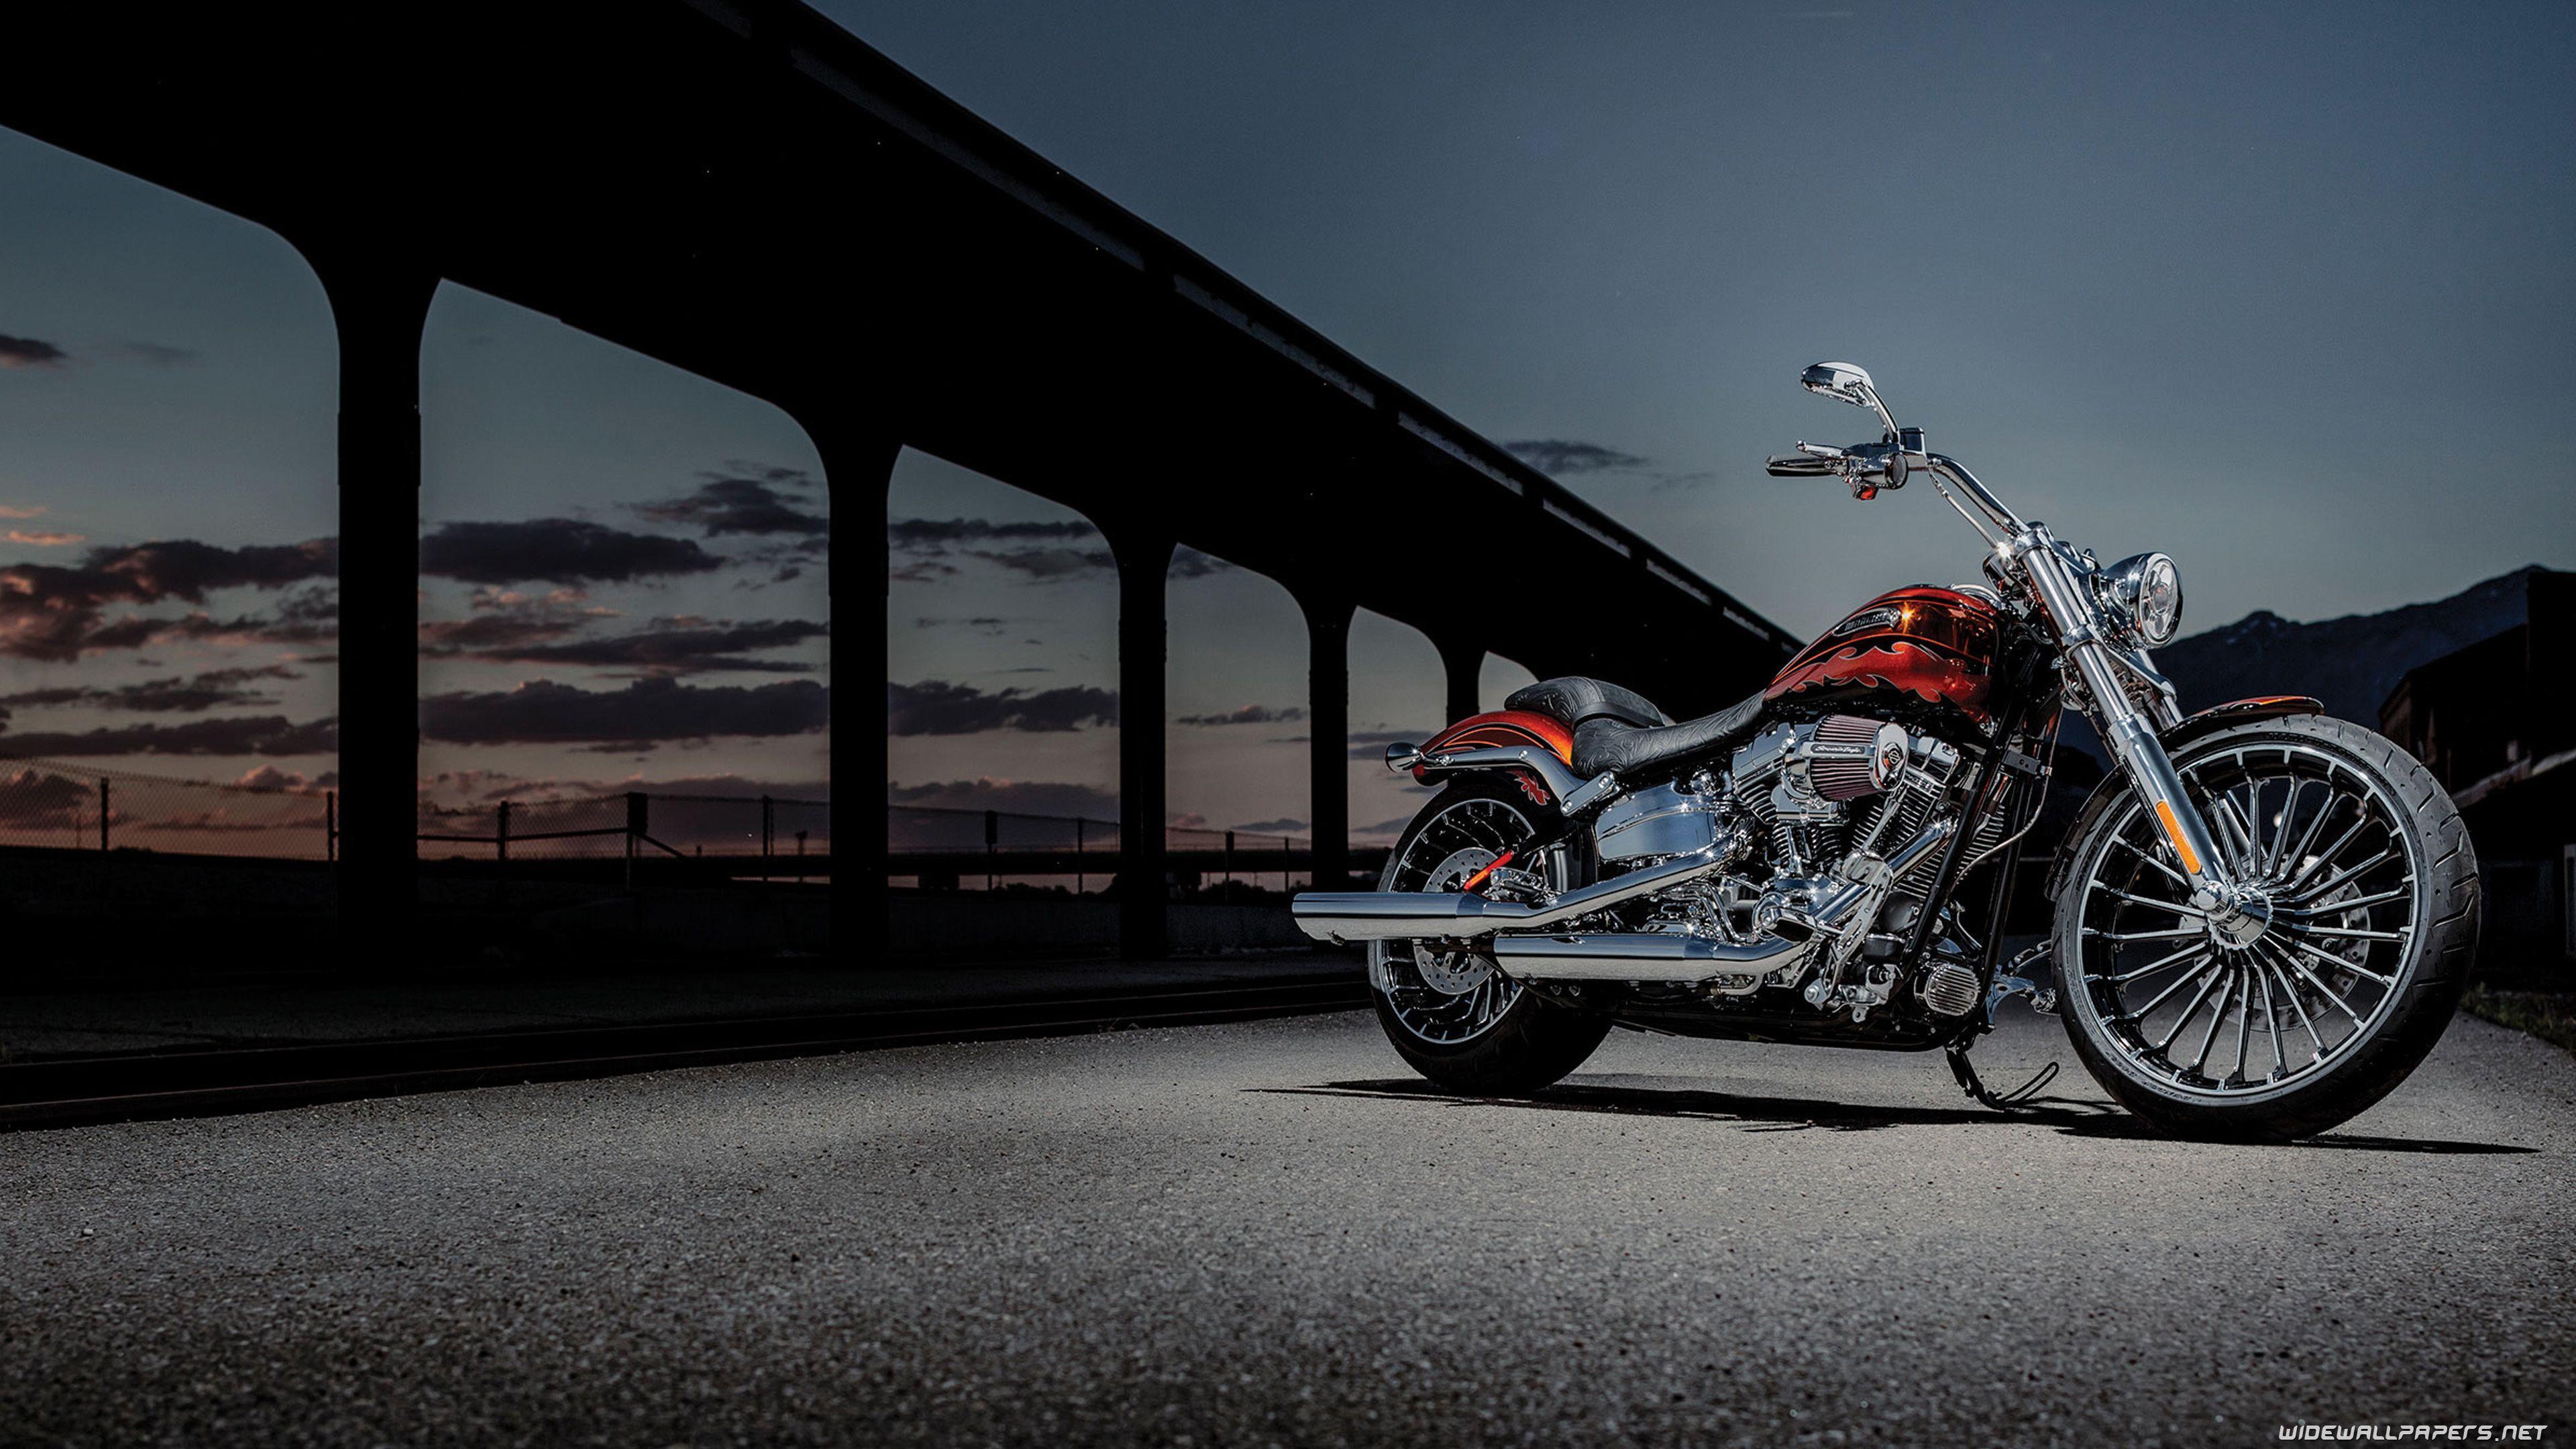 Harley Davidson Image for Free (2MTX Harley Davidson Wallpaper)